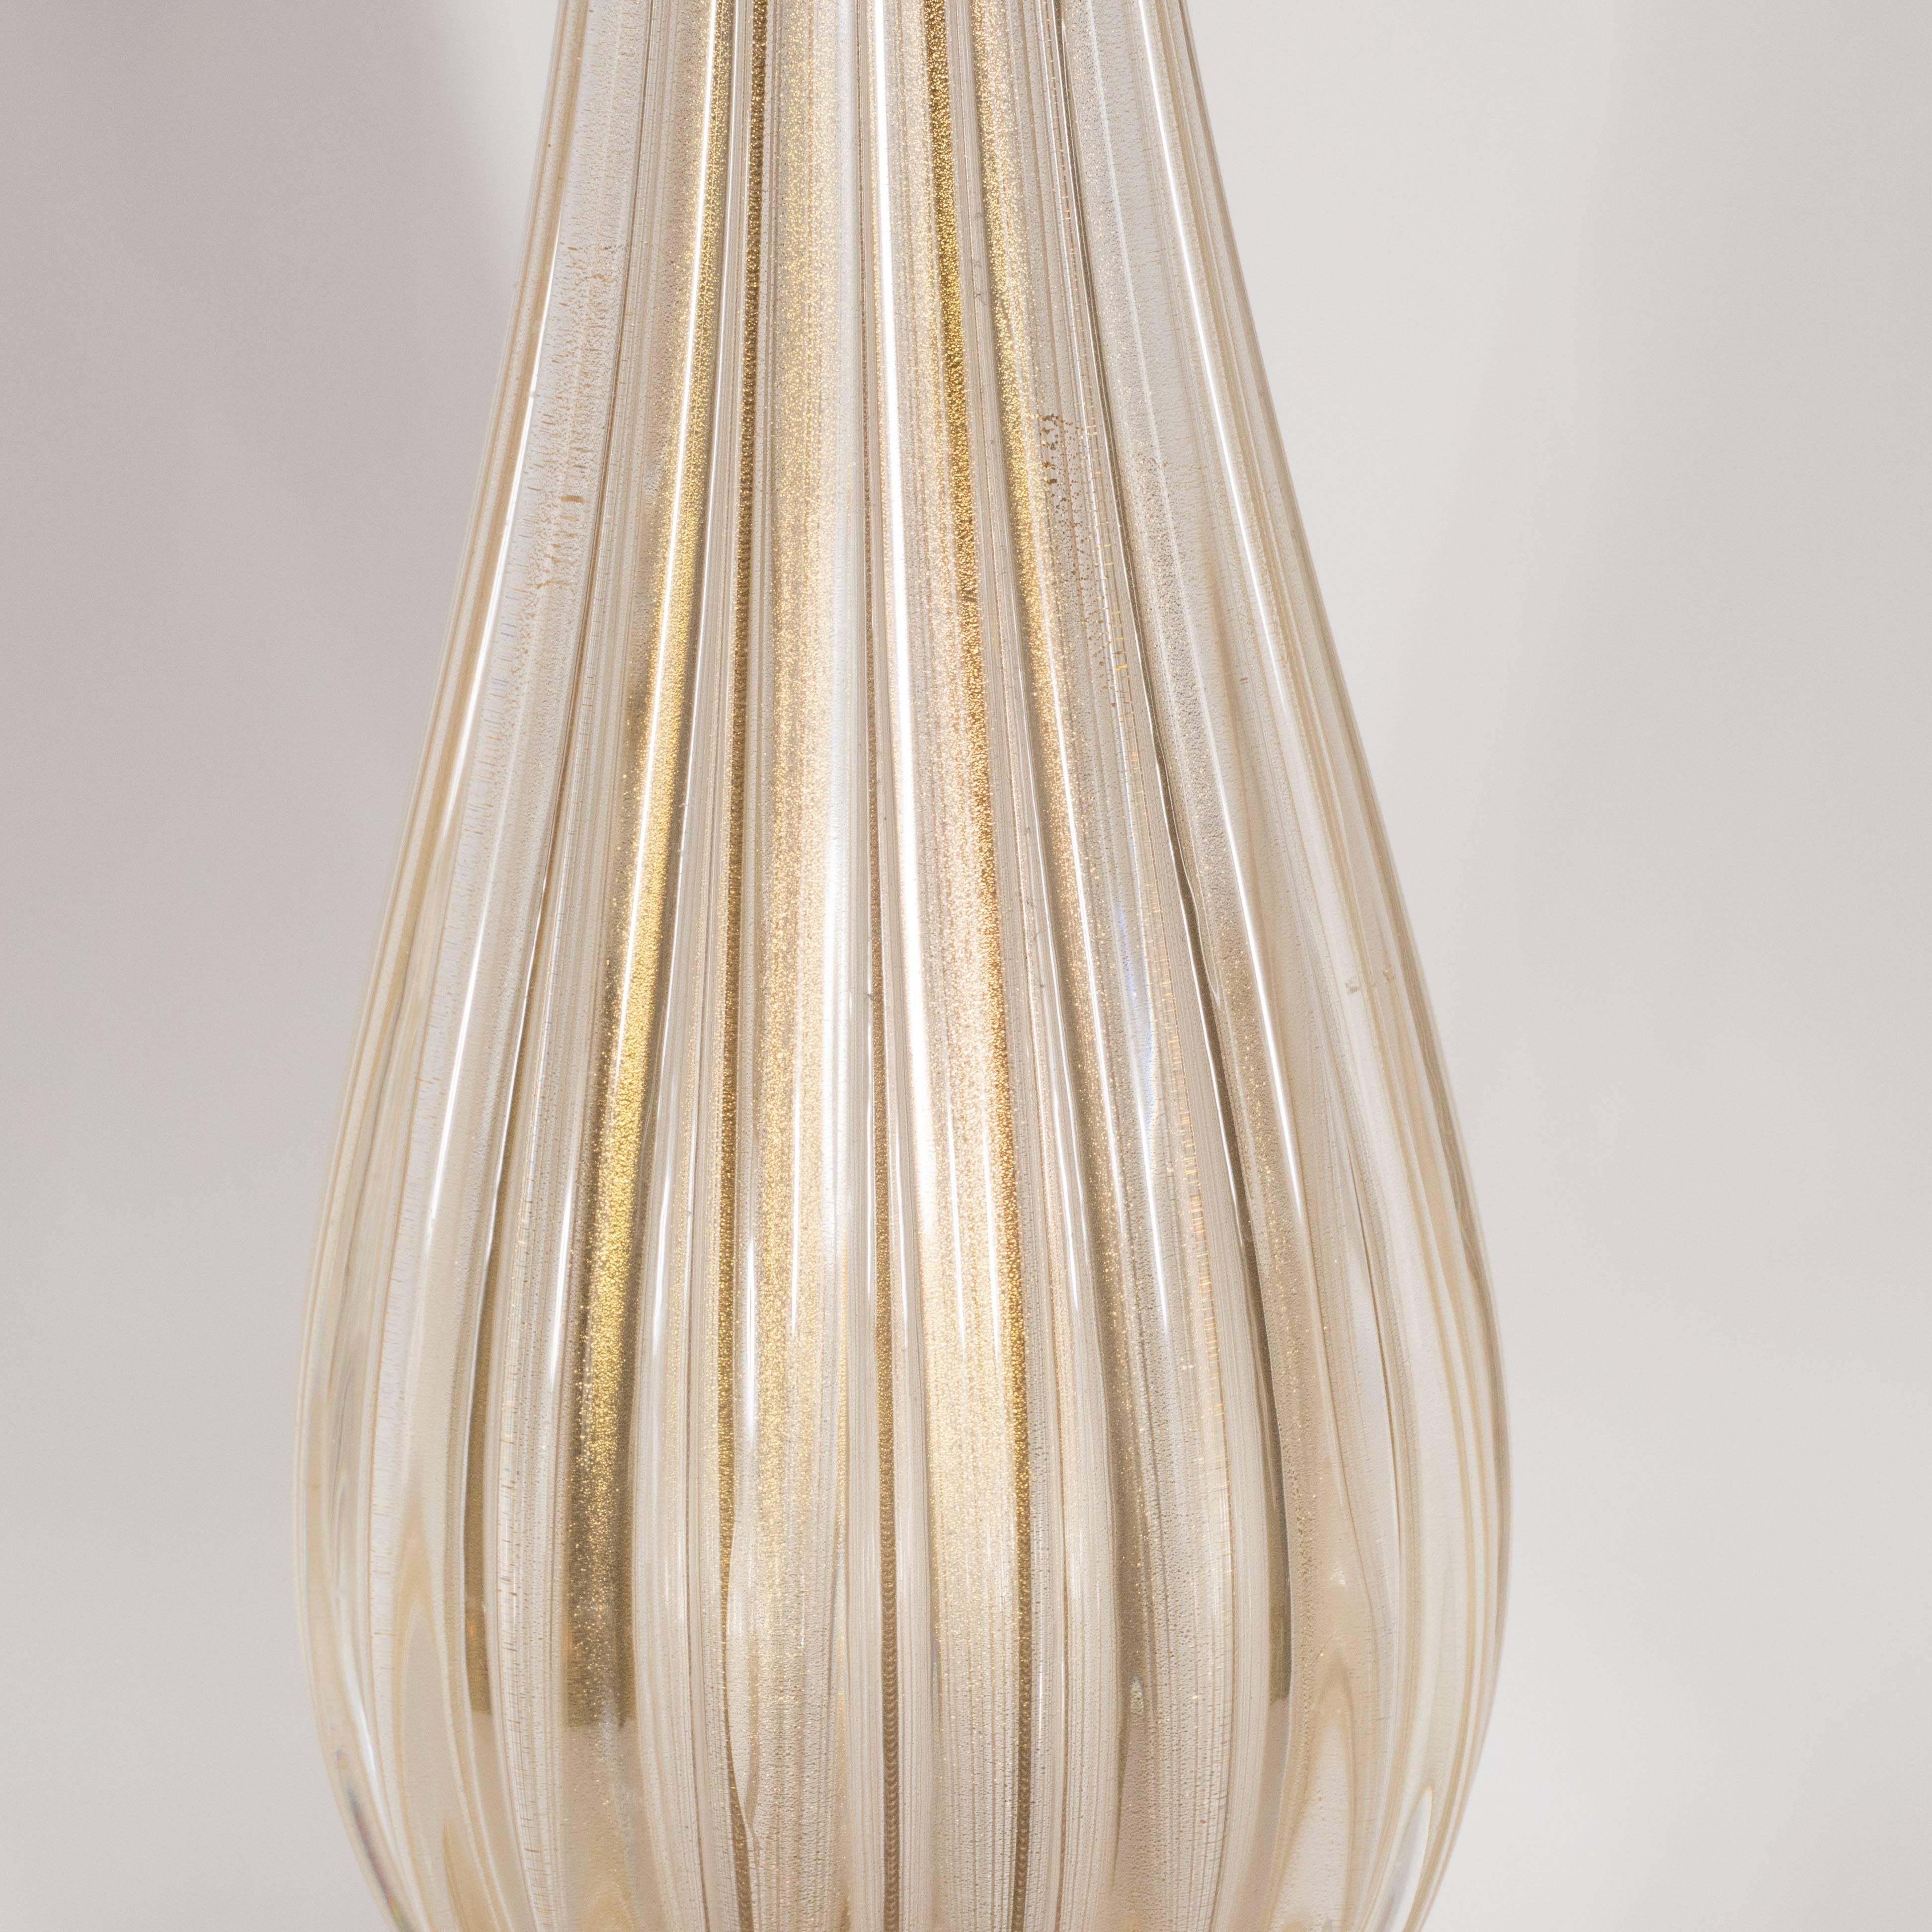 Italian Pair of Modernist Handblown Murano Glass Table Lamps with 24-Karat Gold Flecks